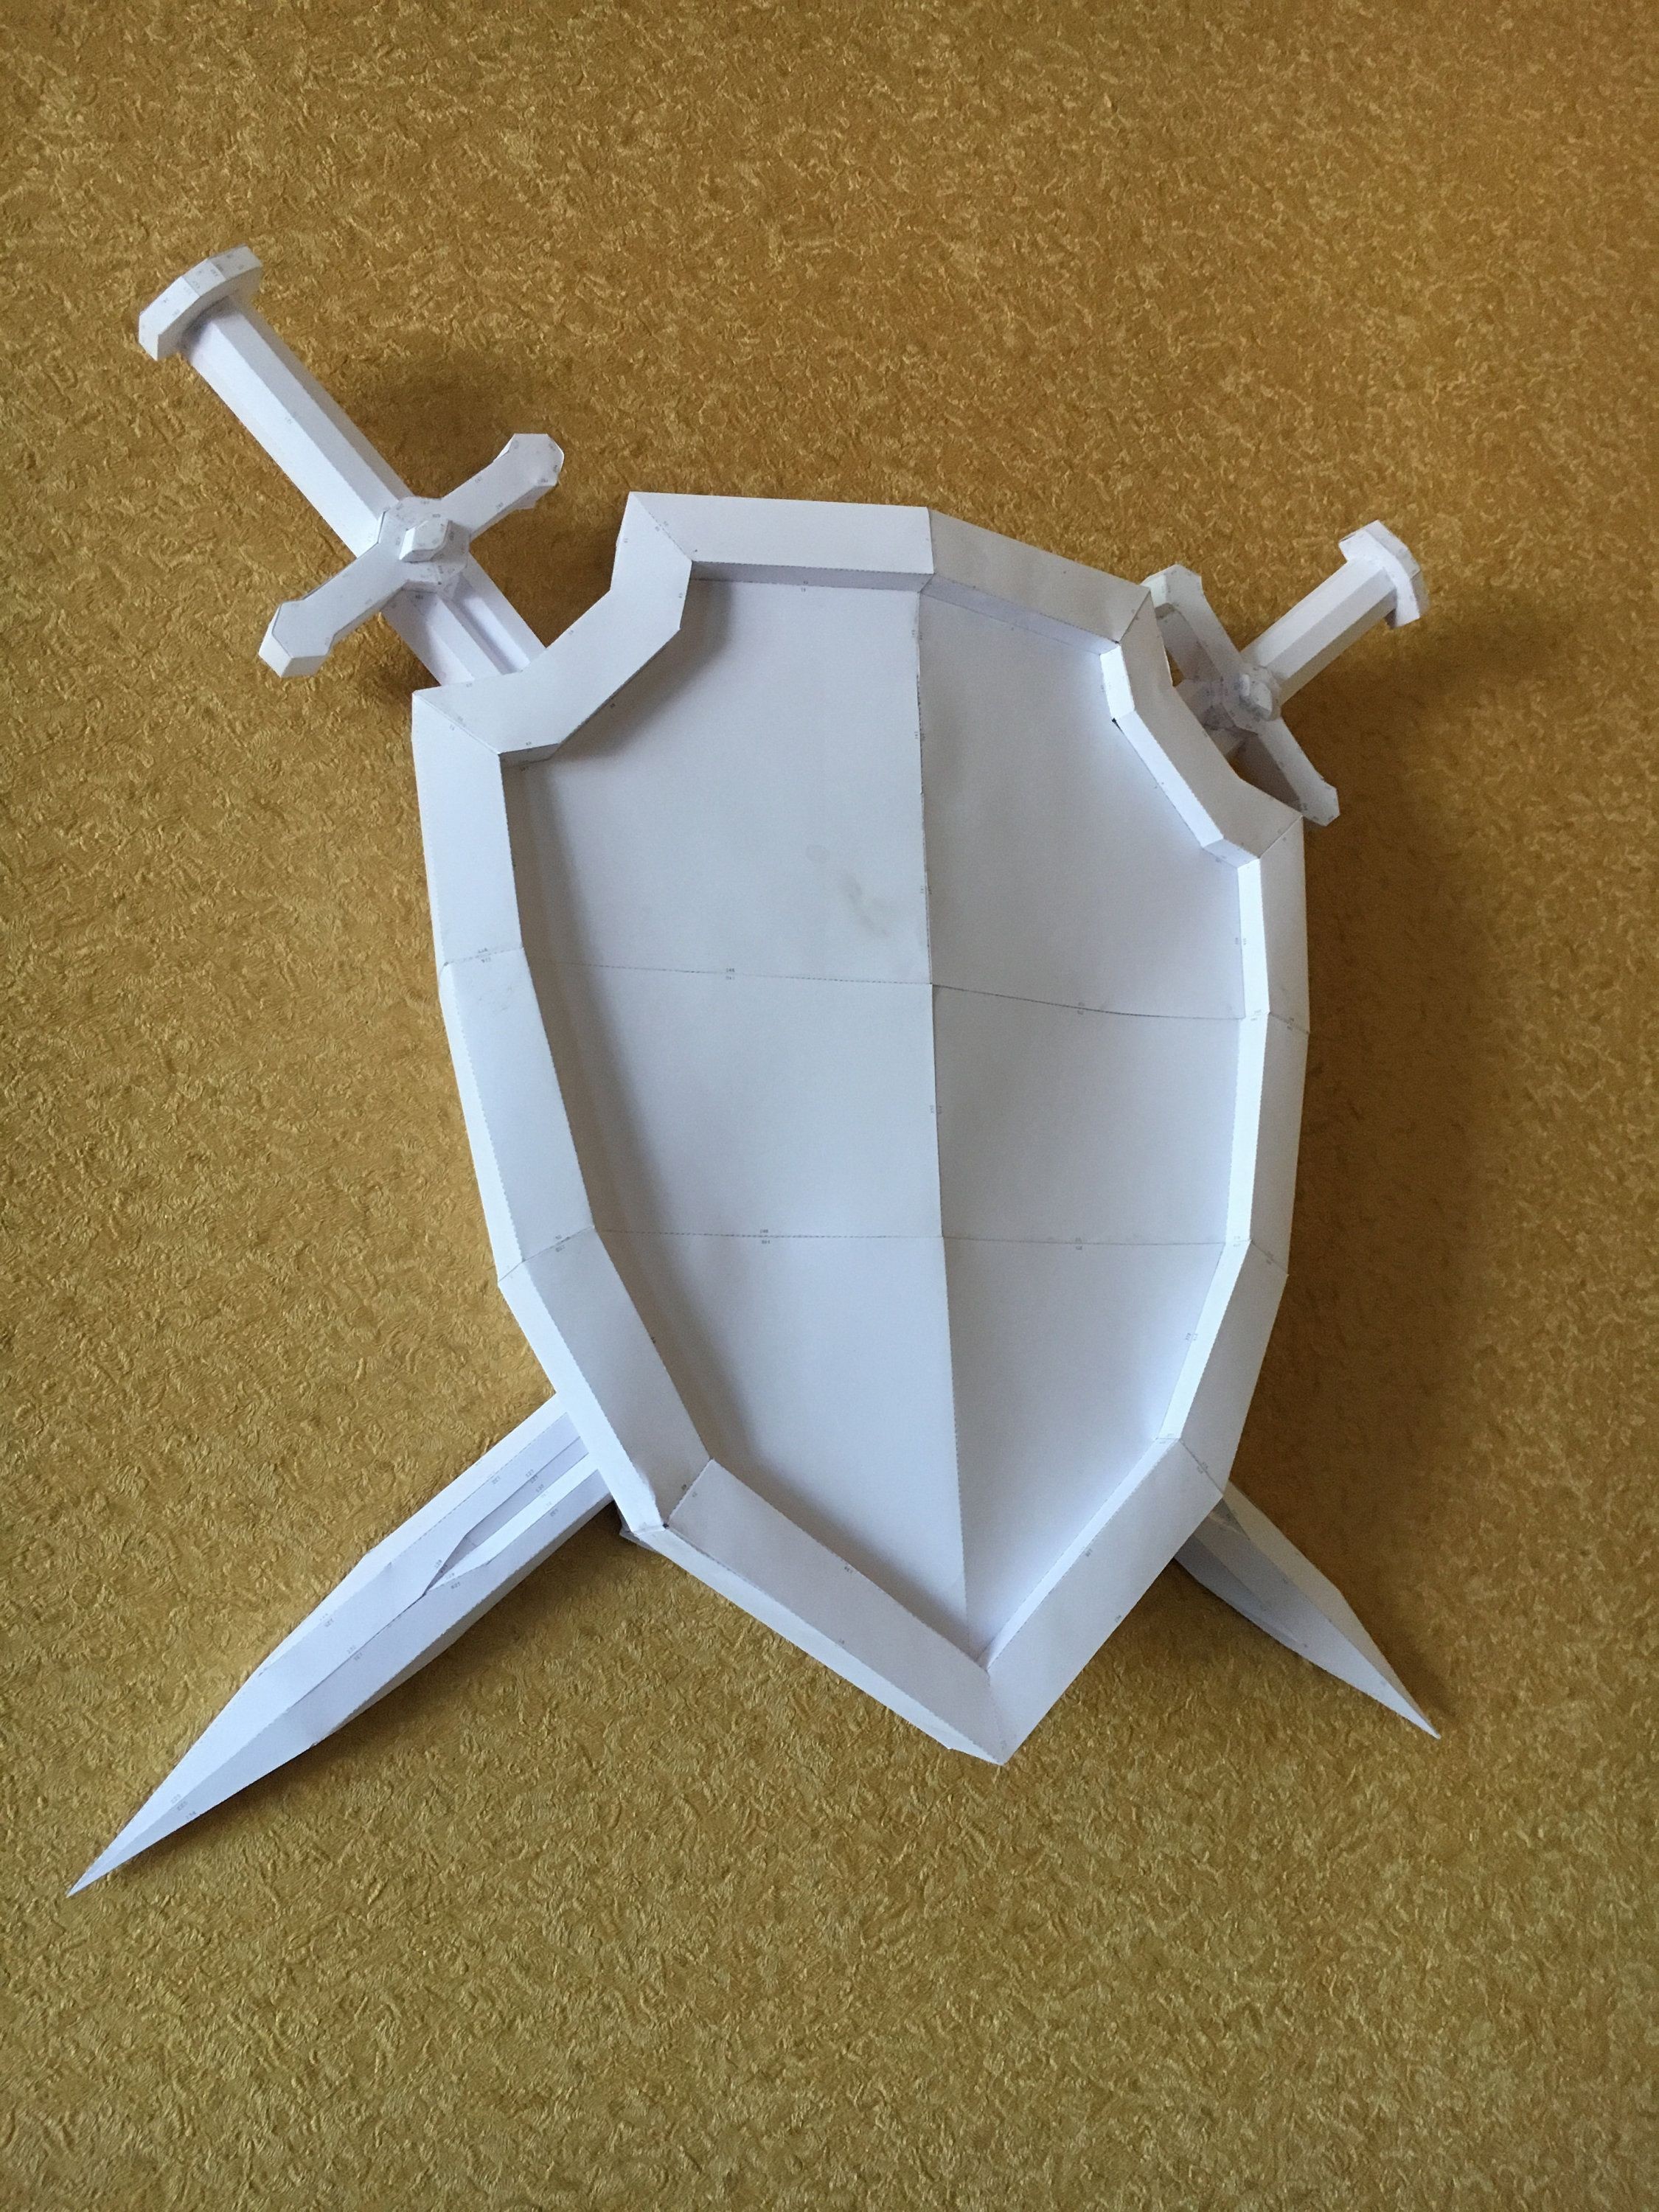 Papercraft Chair Sword Shield Diy Papercraft Model ÐÑÐ¼Ð°Ð¶Ð½ÑÐµ Ð¸Ð·Ð´ÐµÐ Ð¸Ñ